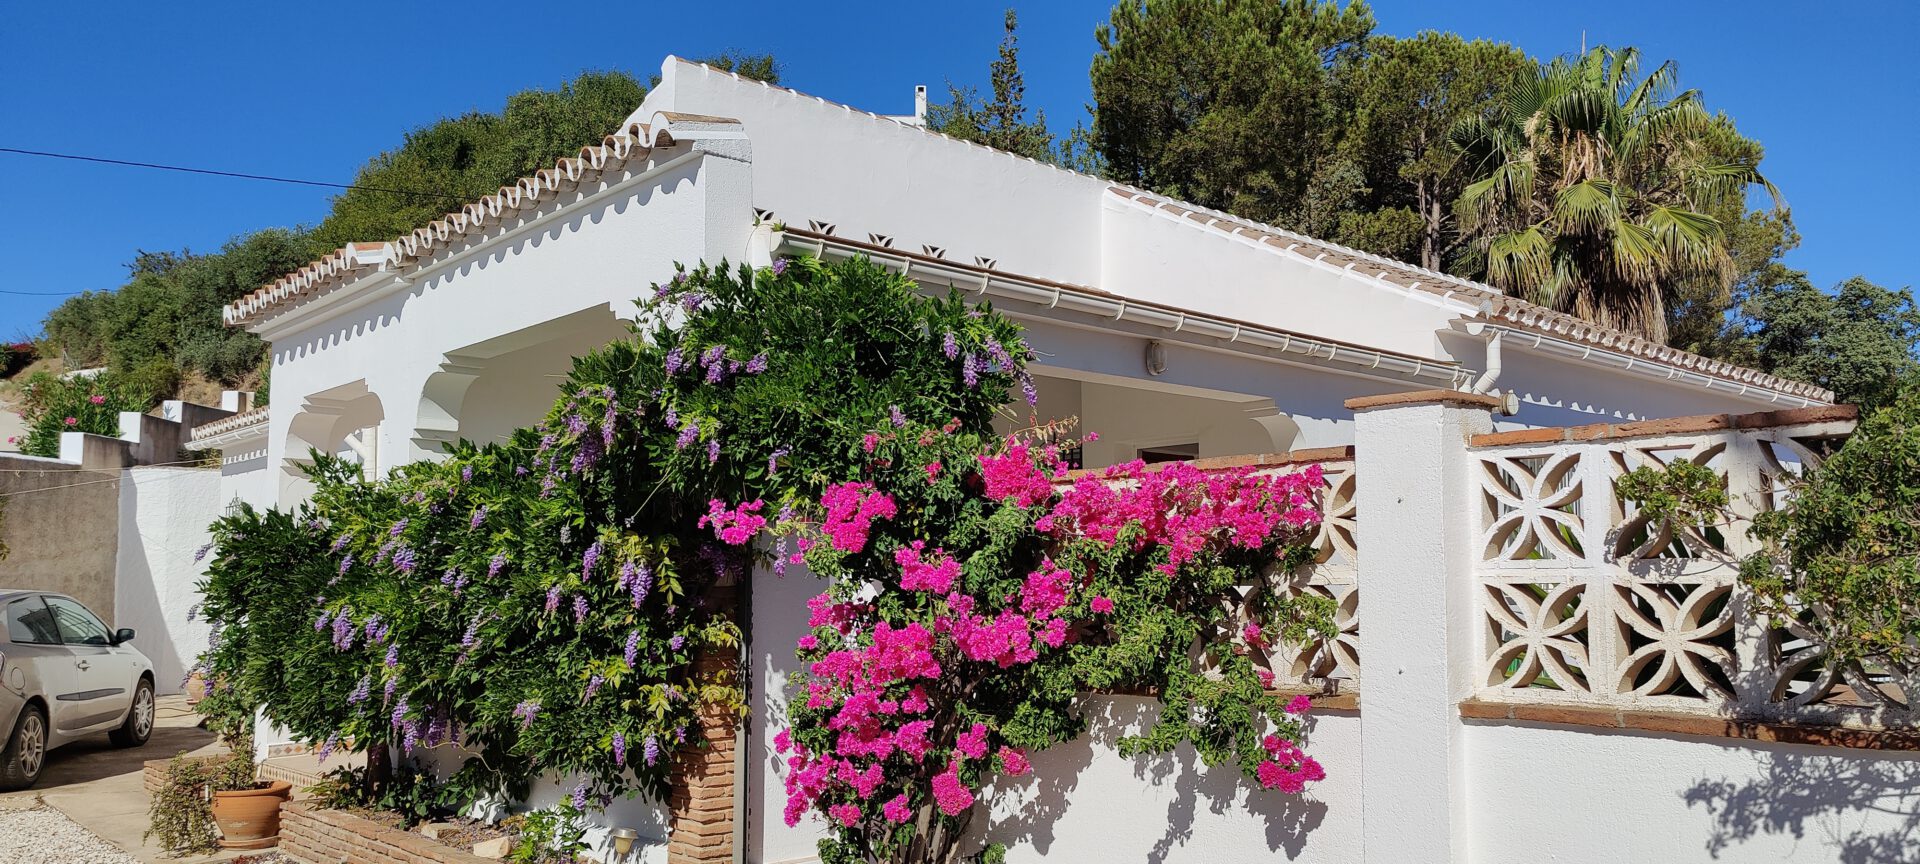 Casa del Barco | het perfecte vakantiehuis in Spanje, Andalusie